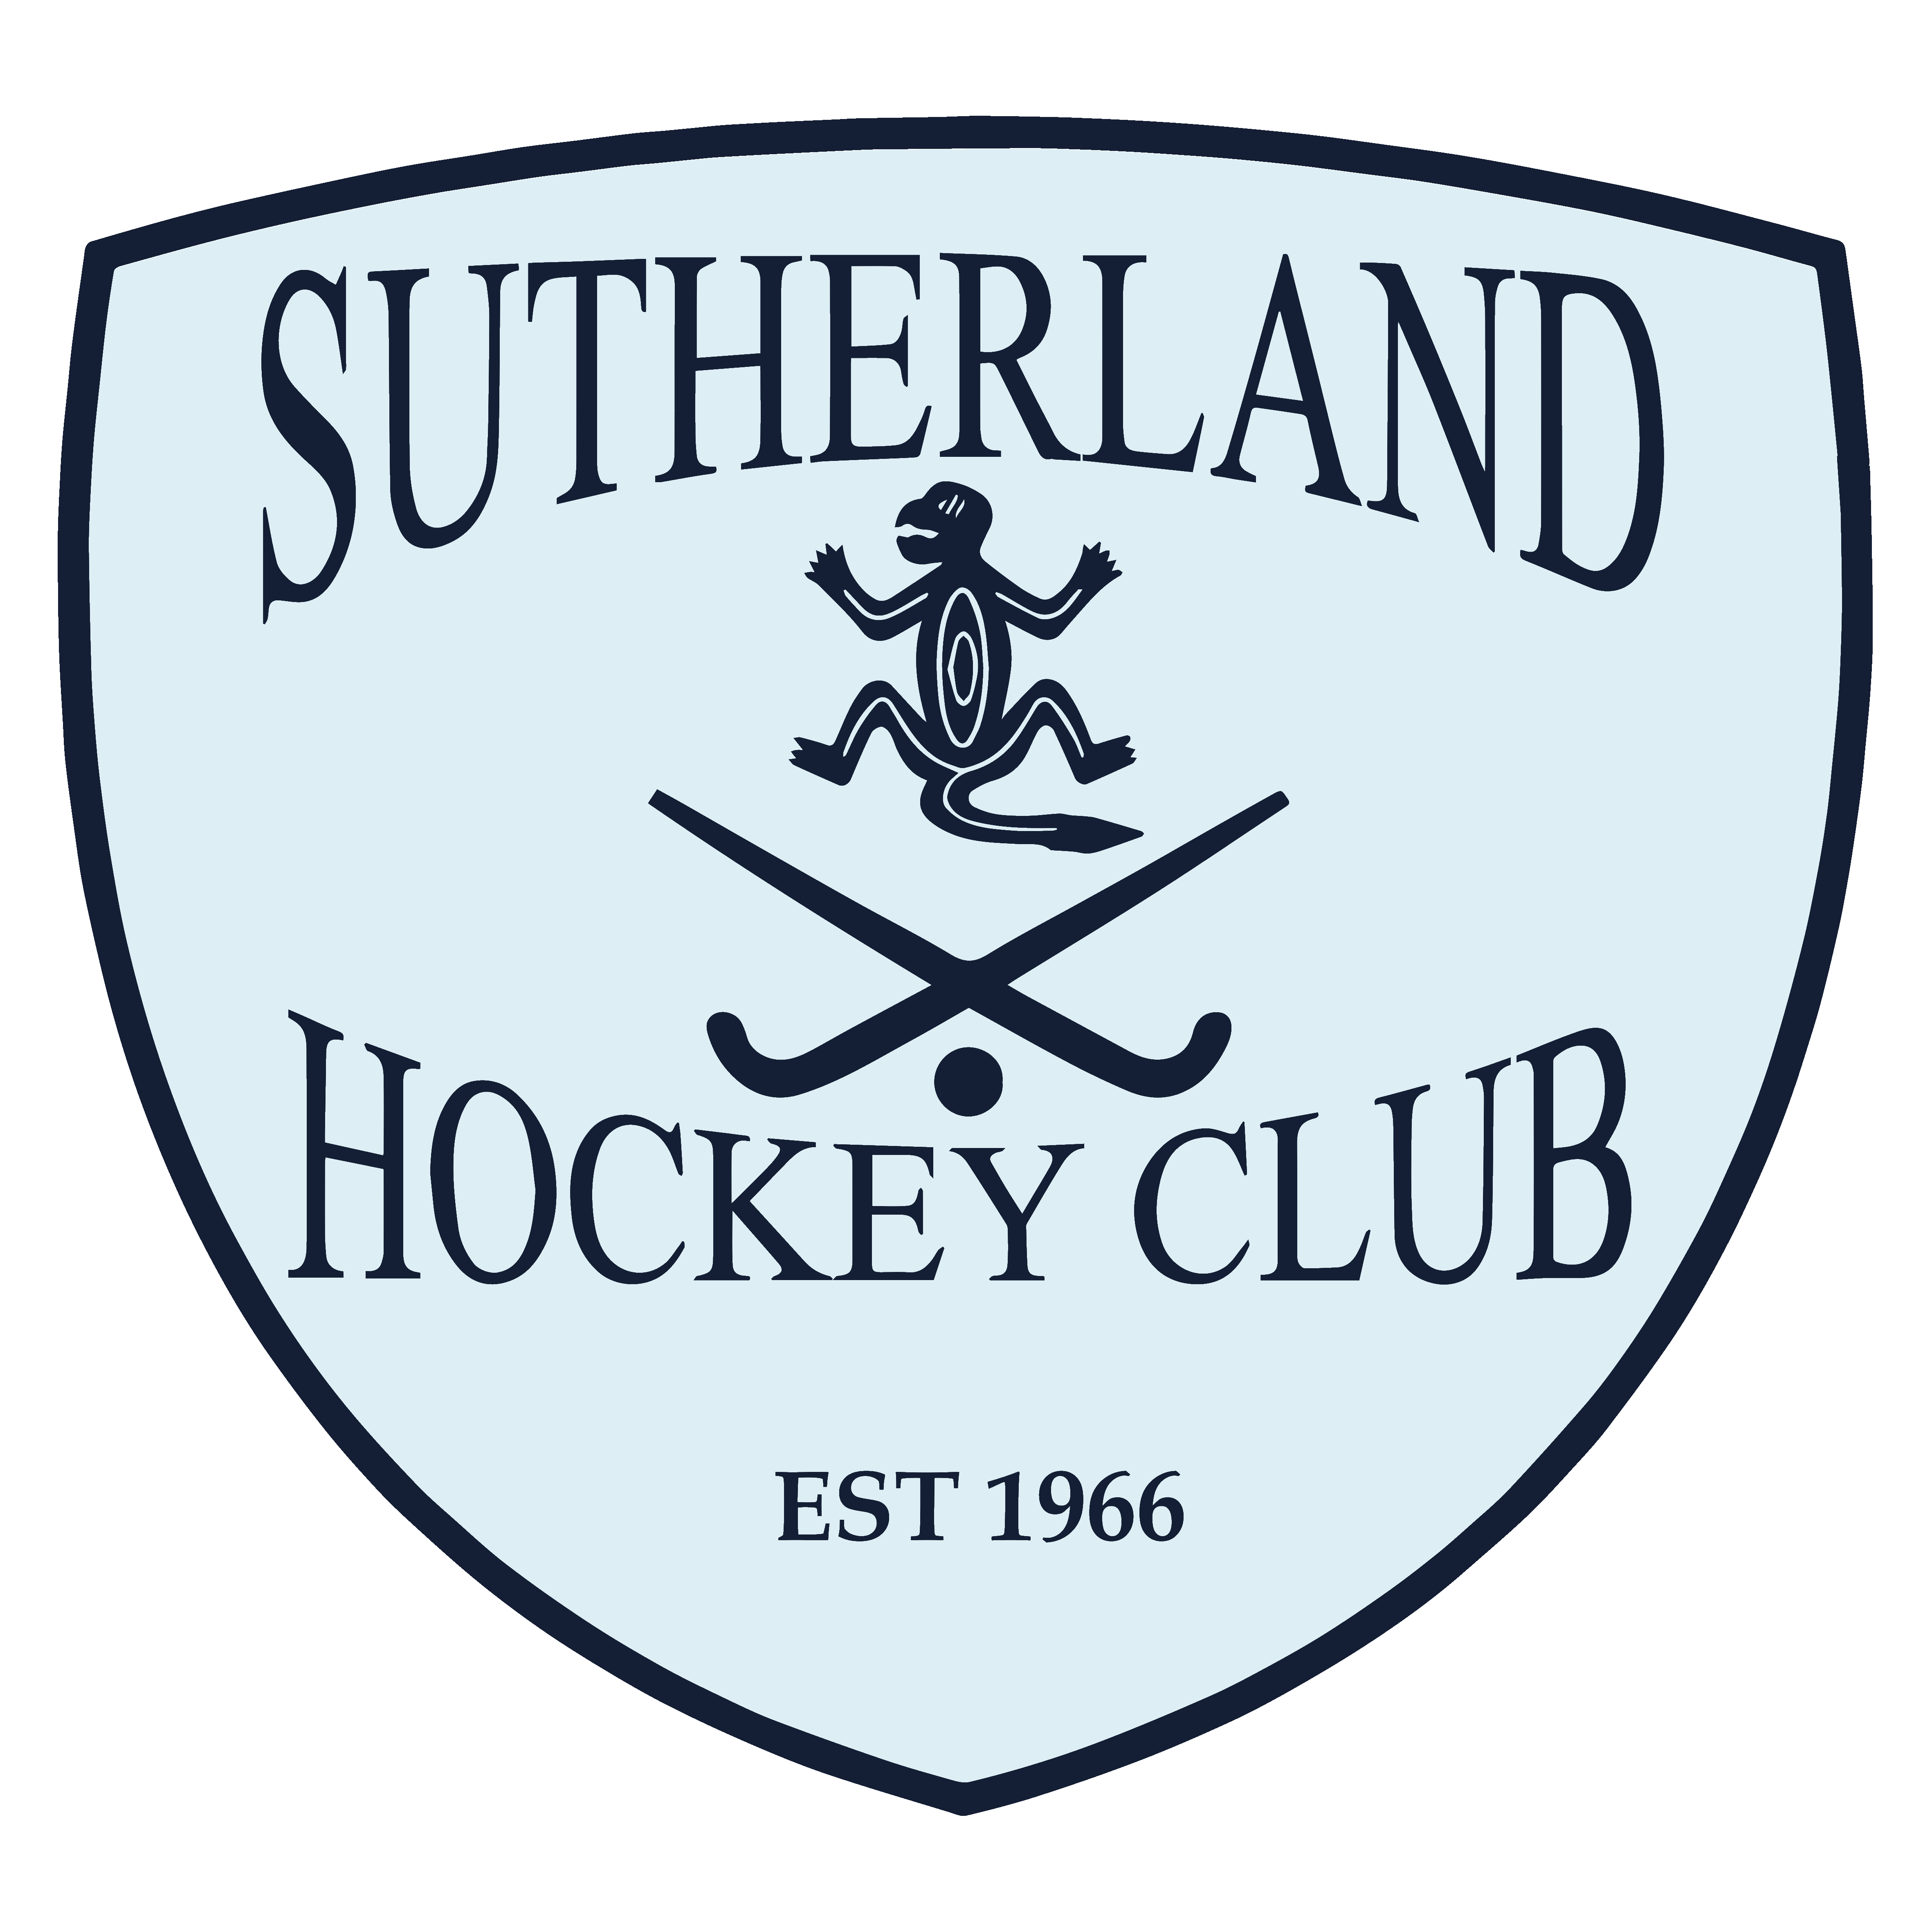 Sutherland Hockey Club